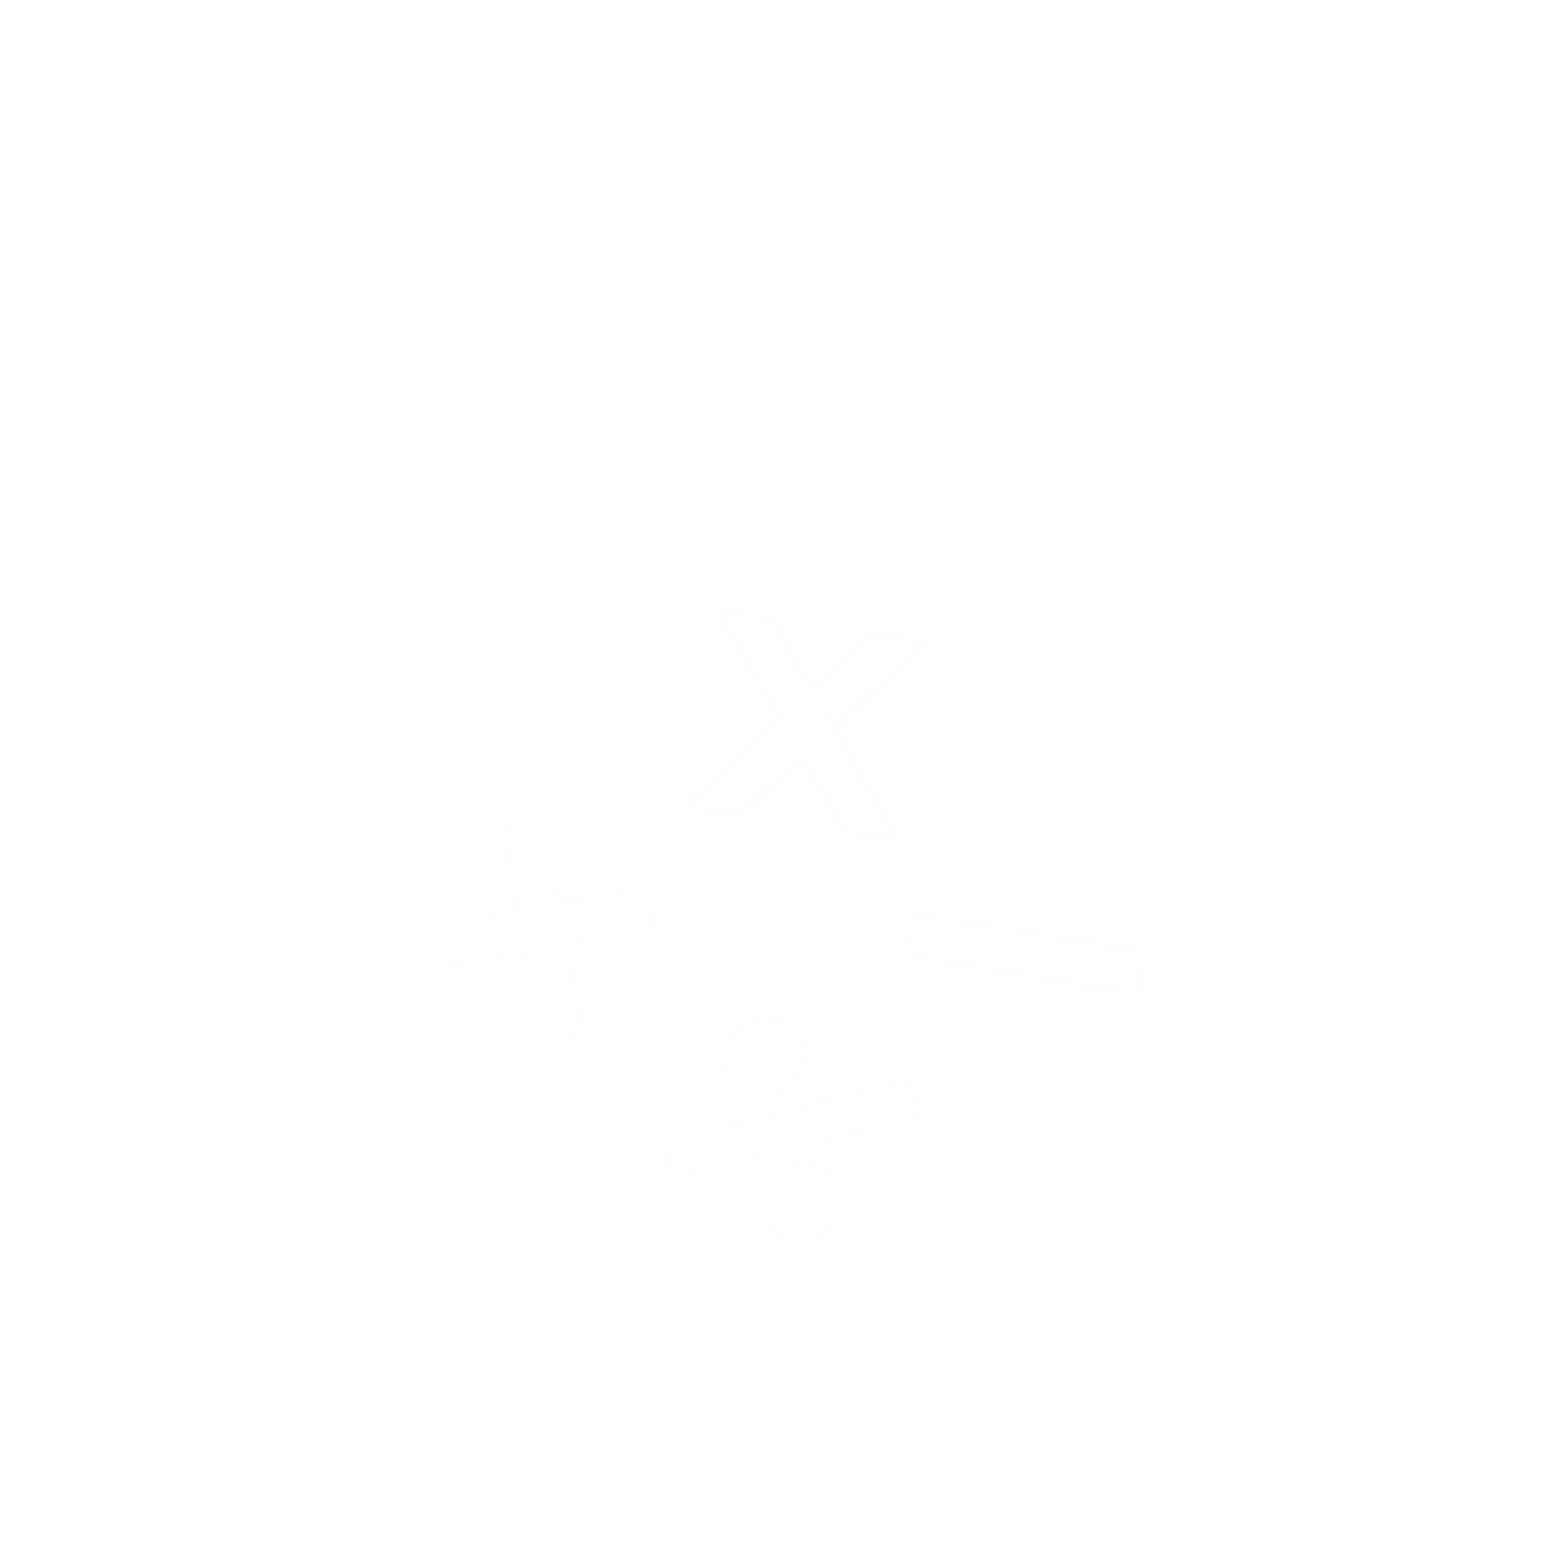 maths symbols